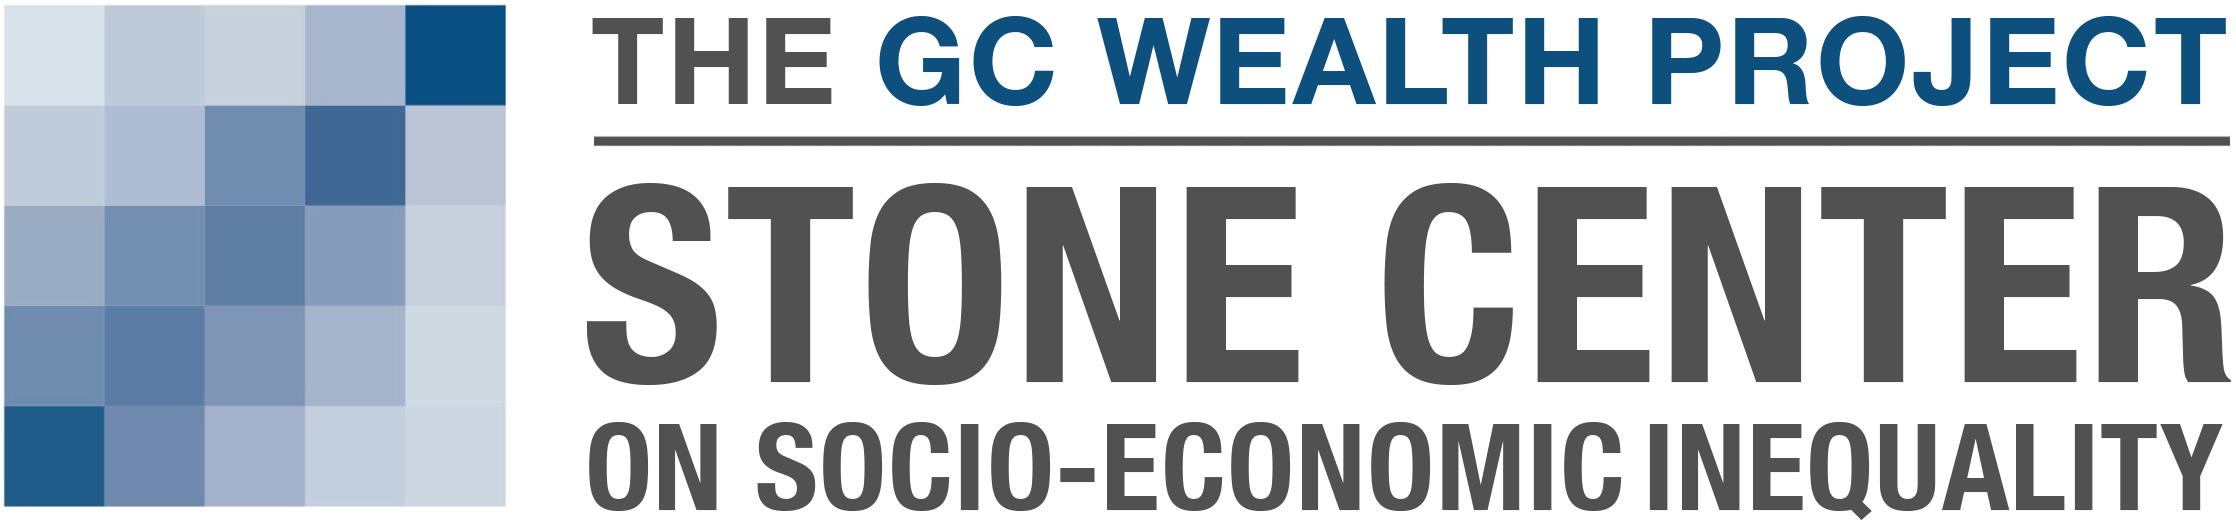 Graduate Center Wealth Project logo